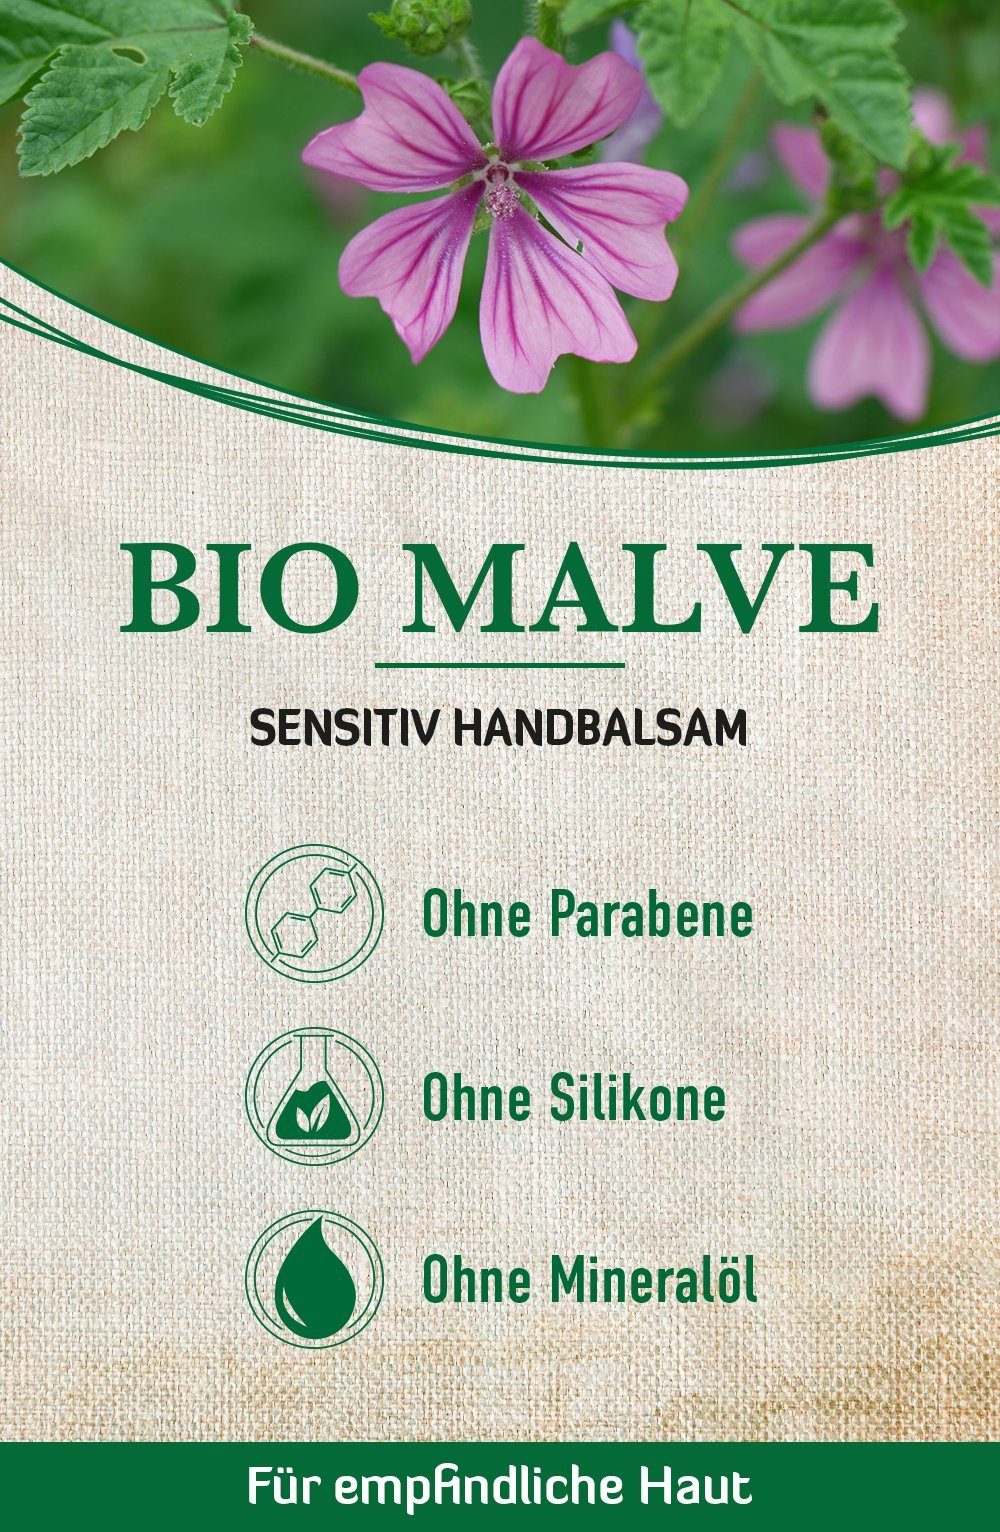 alkmene Handcreme vegane Handcreme Handbalsam - 1-tlg. sensitiv - Malve Bio Hautpflege Creme,